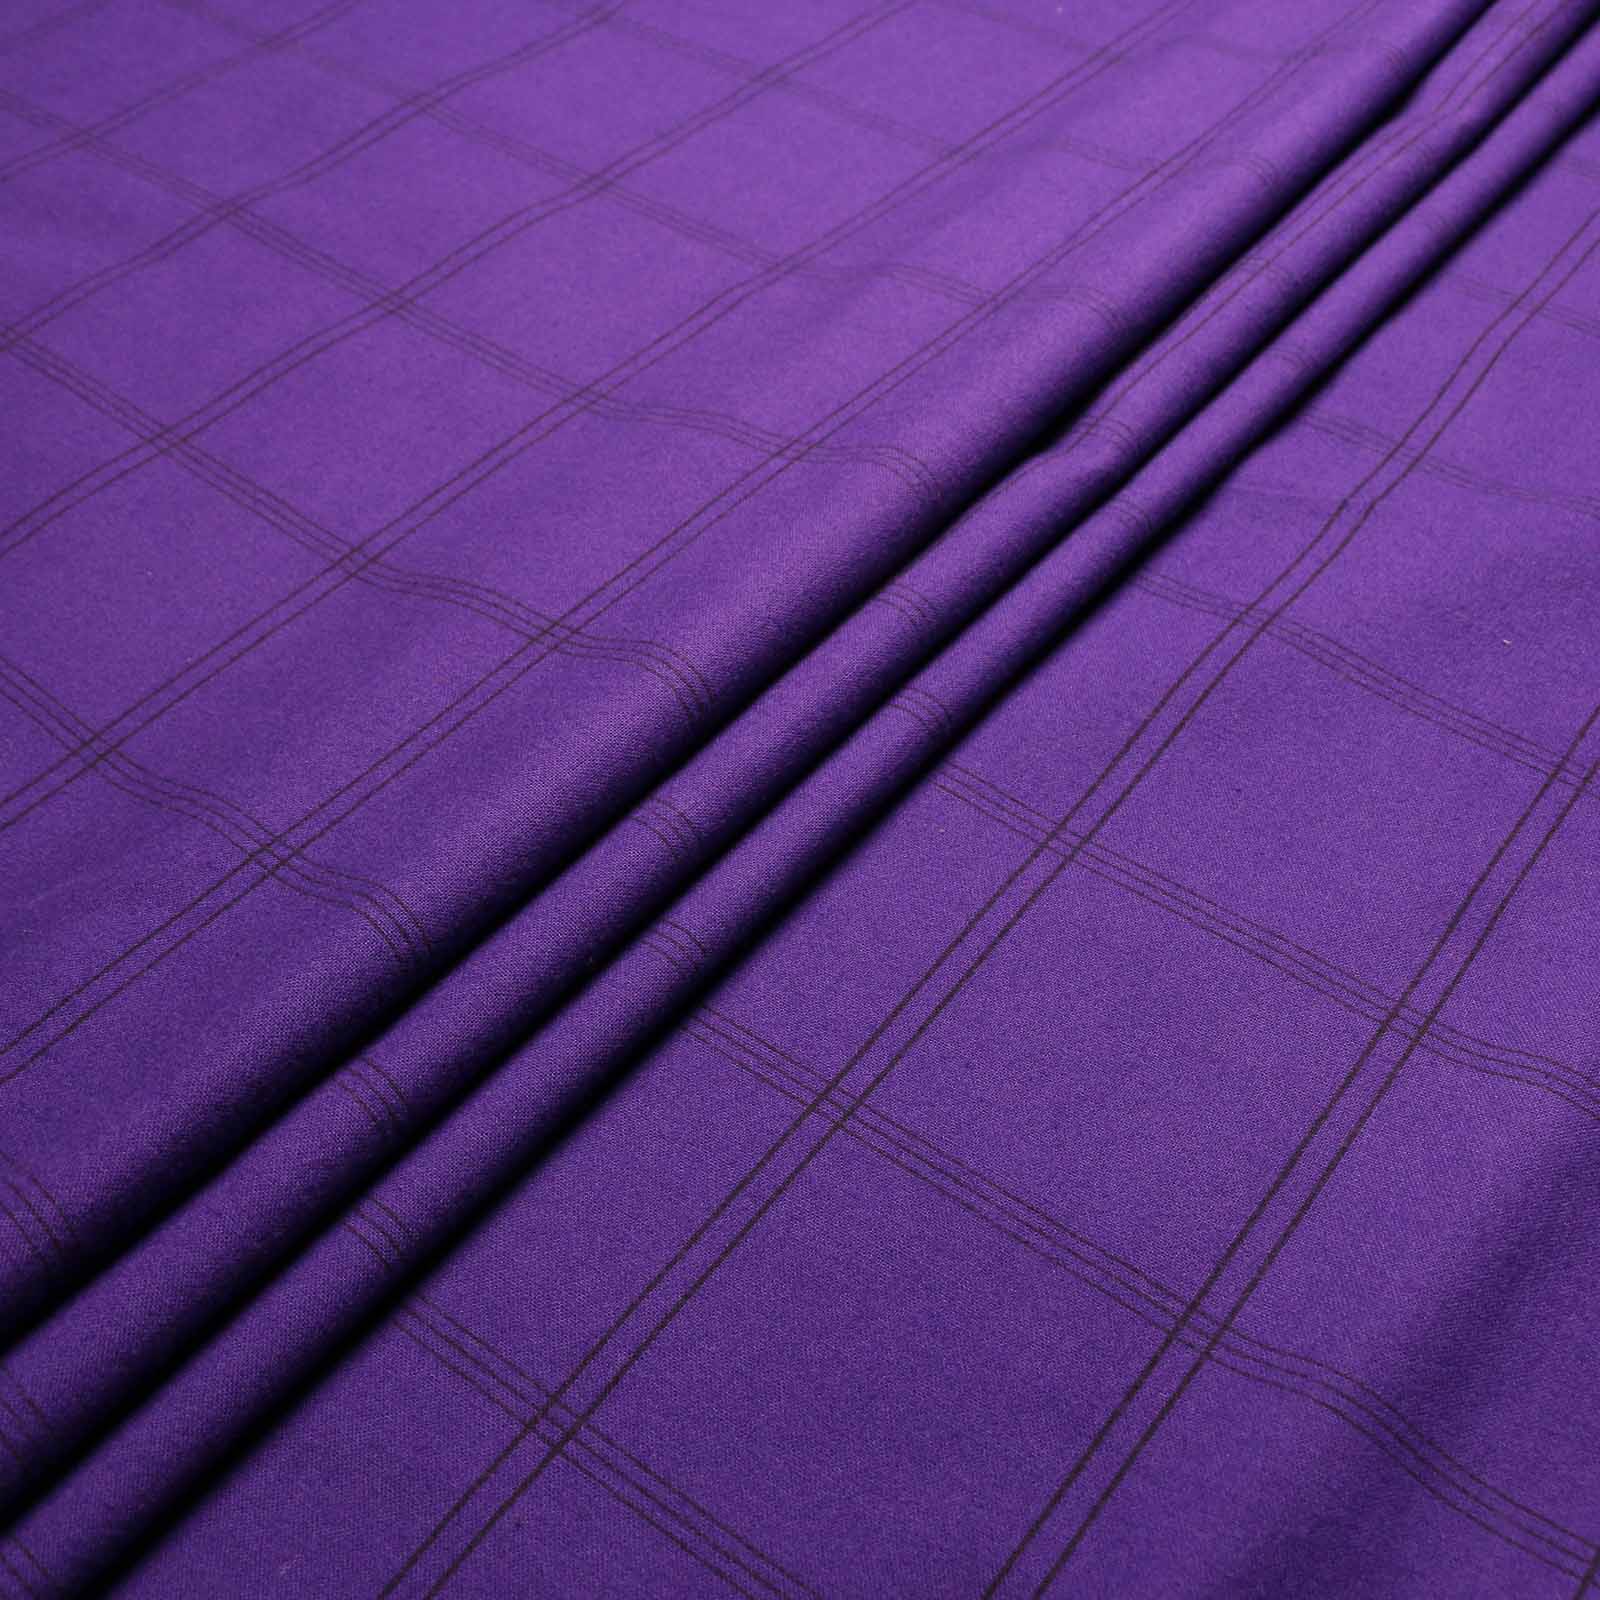 folded purple and black check pattern brushed cotton dressmaking fabric